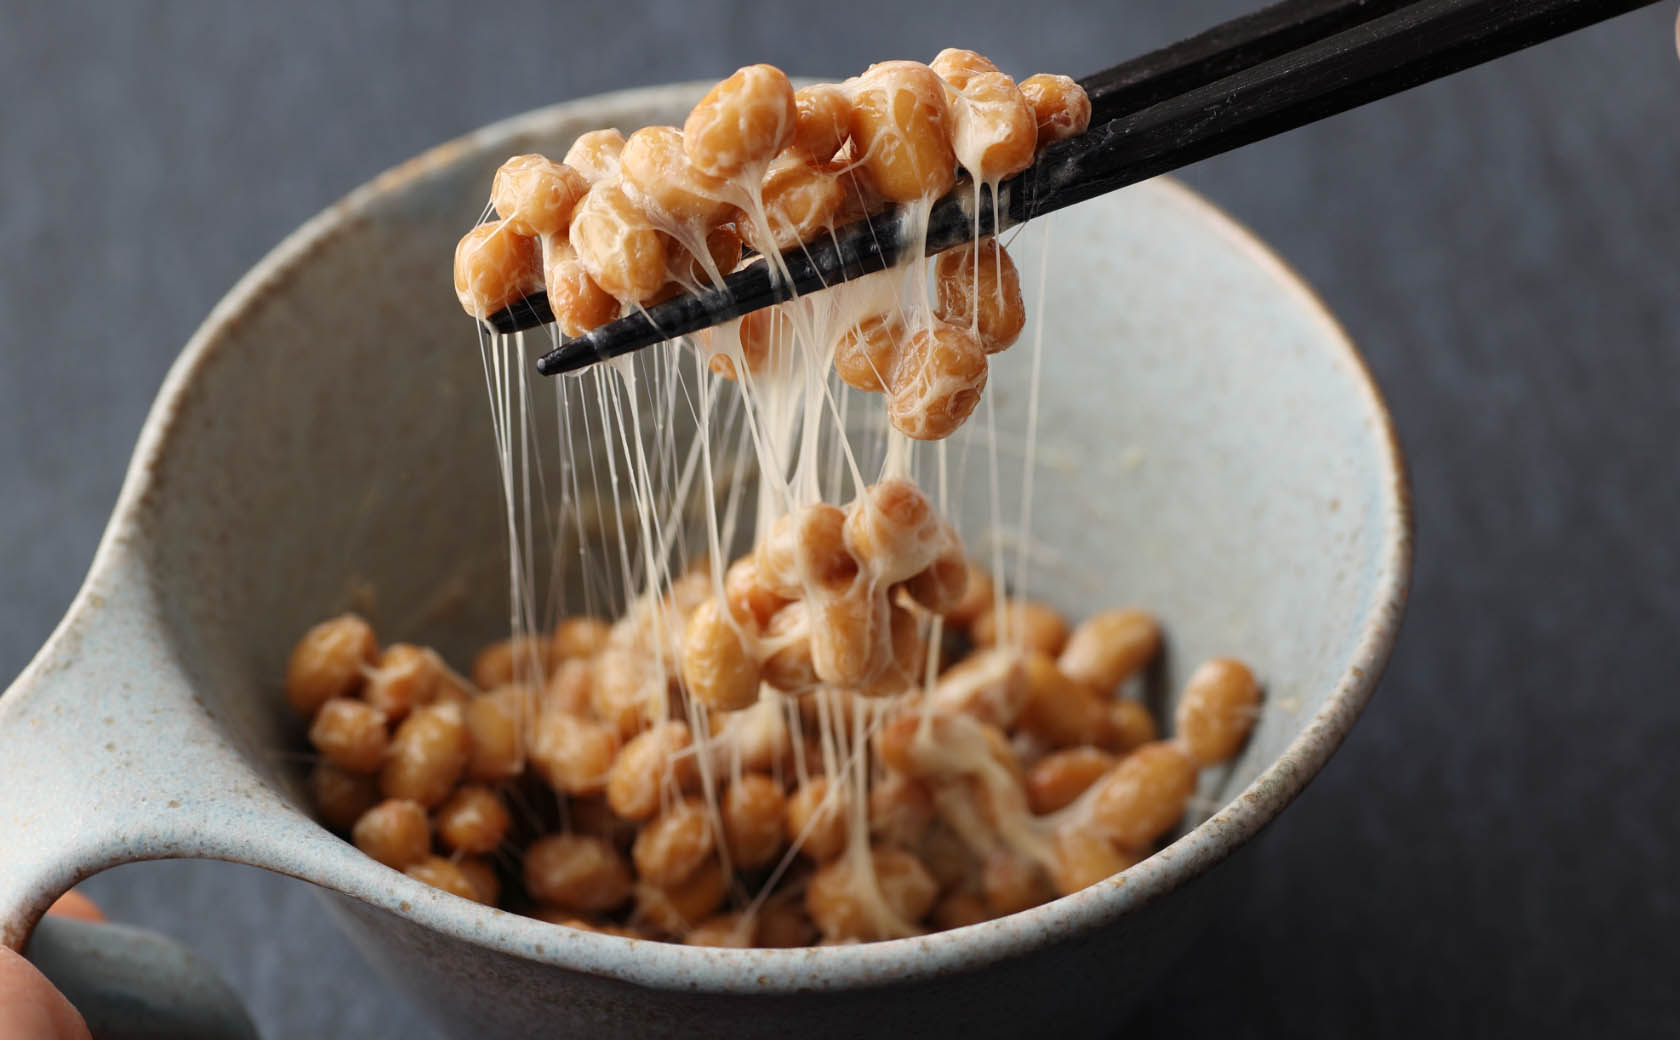 Fine threads are produced when you lift natto